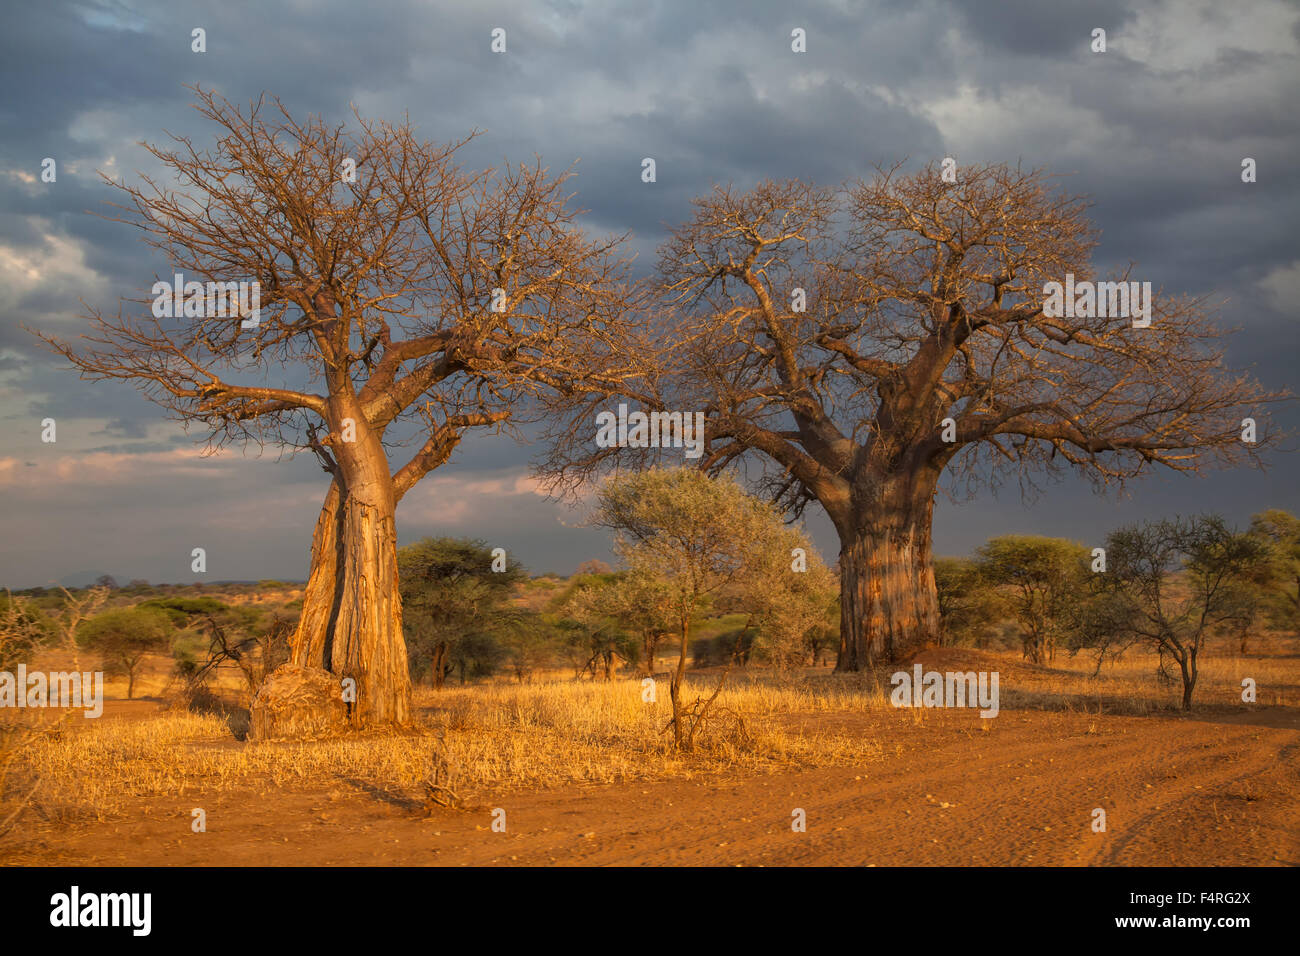 África, de baobabs, Adansonia digitata, árboles, tormentas eléctricas, paisaje, paisaje, humor, safari, viajes, sabana, sundown, Tanzania, Foto de stock